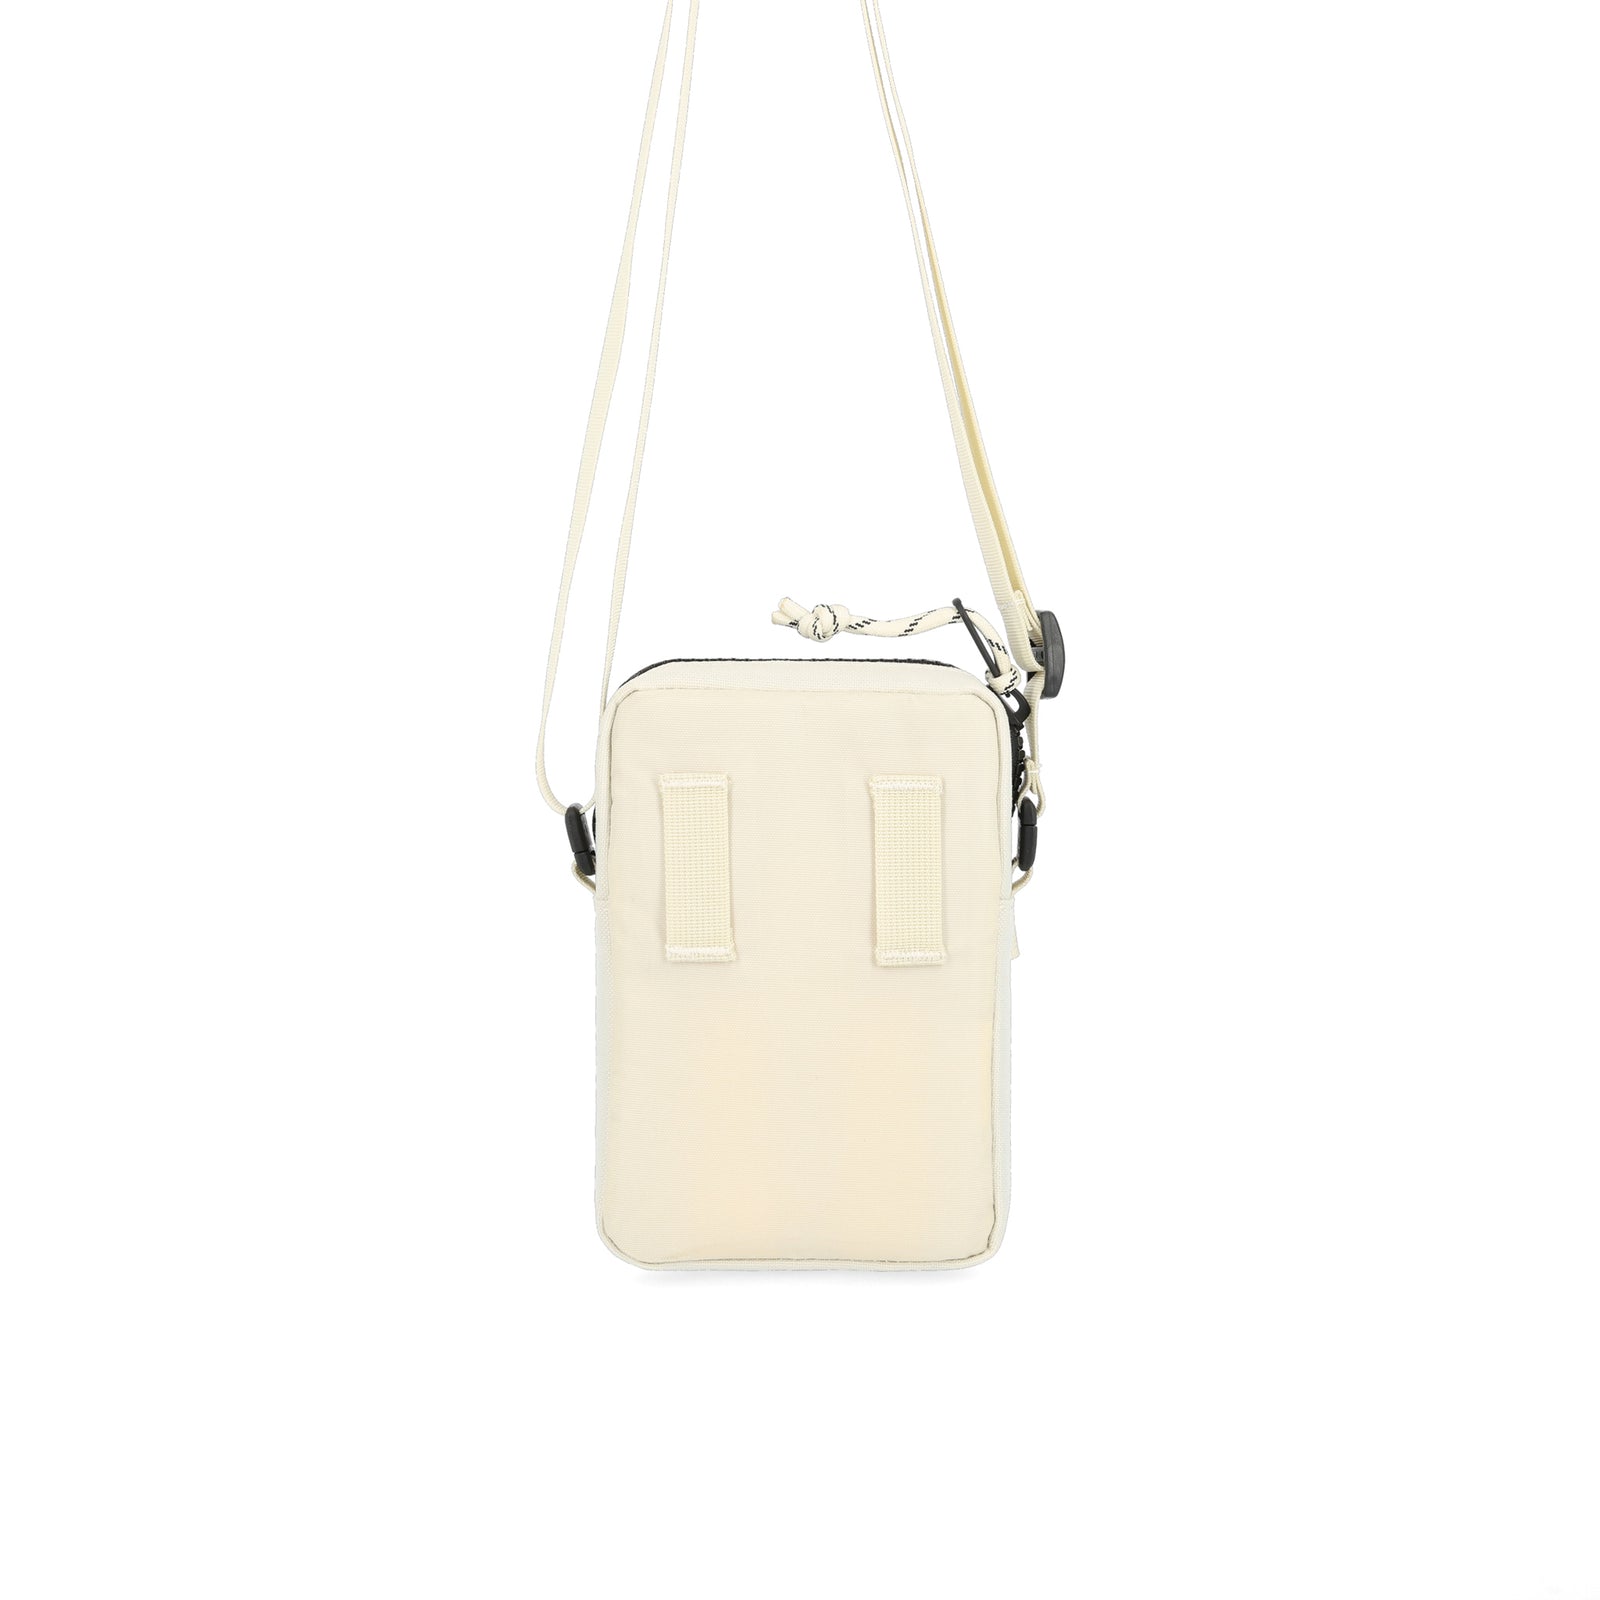 Back hip belt attachment points on Topo Designs Mini Shoulder Bag crossbody travel purse in "Bone White" recycled nylon.